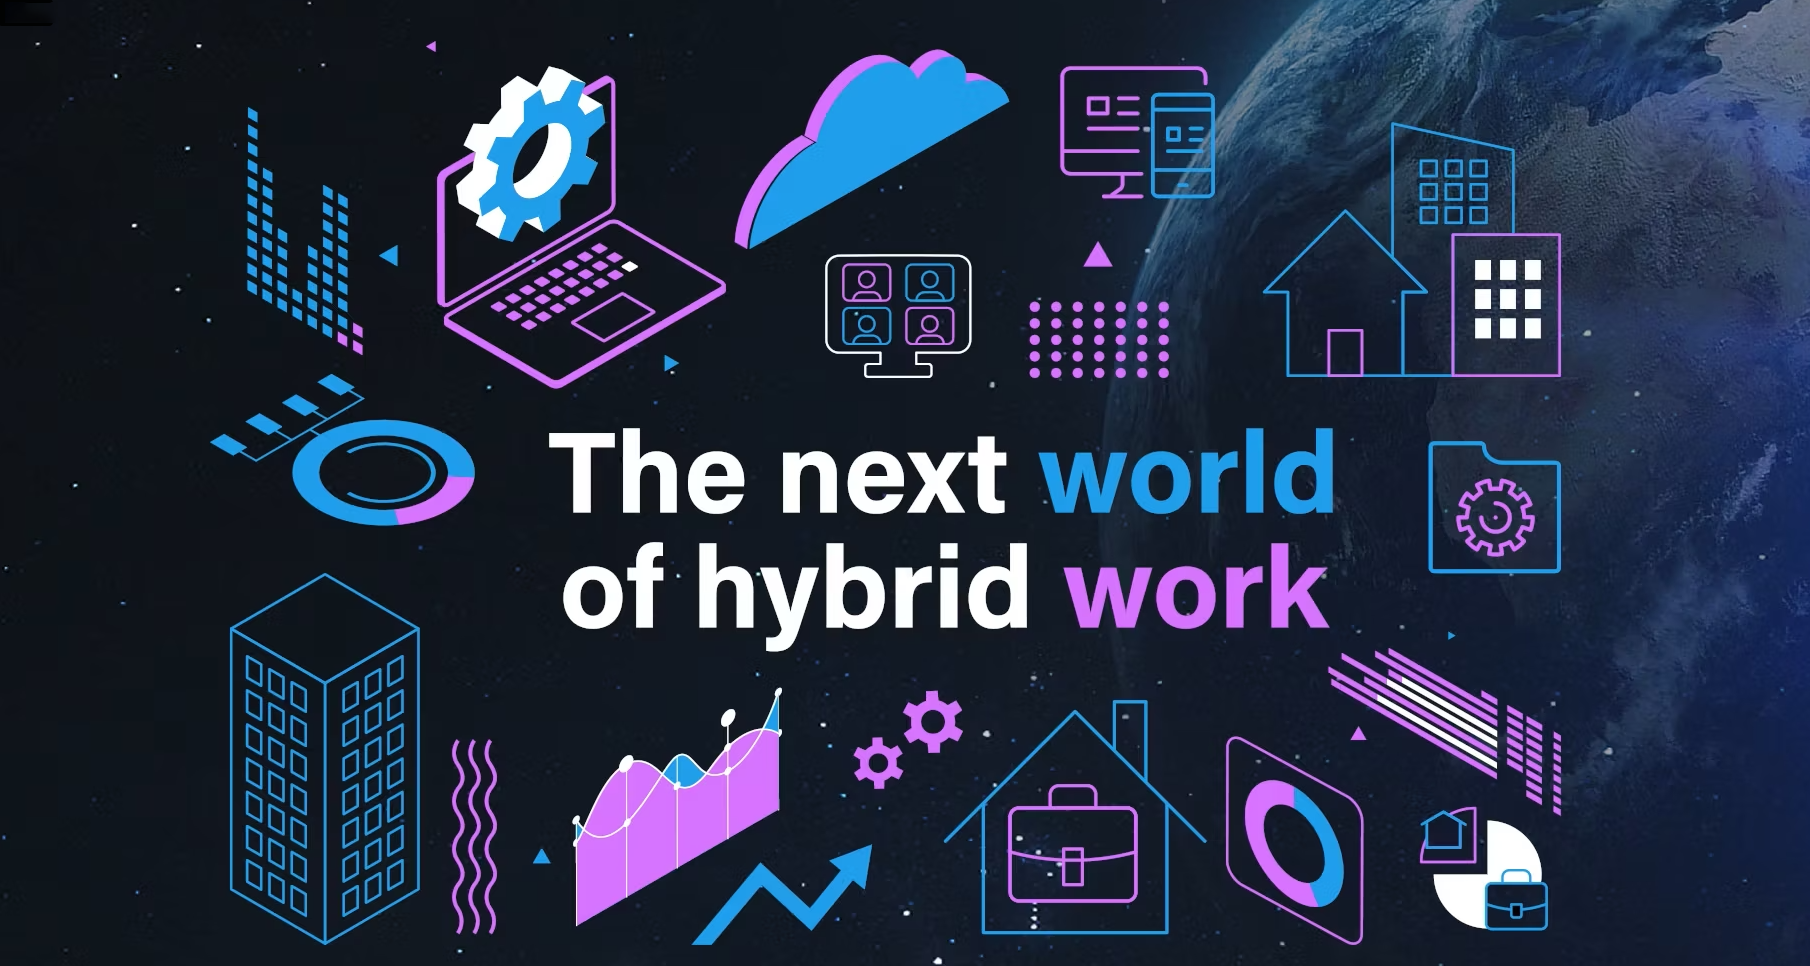 Episode 1: The New World of Hybrid Work